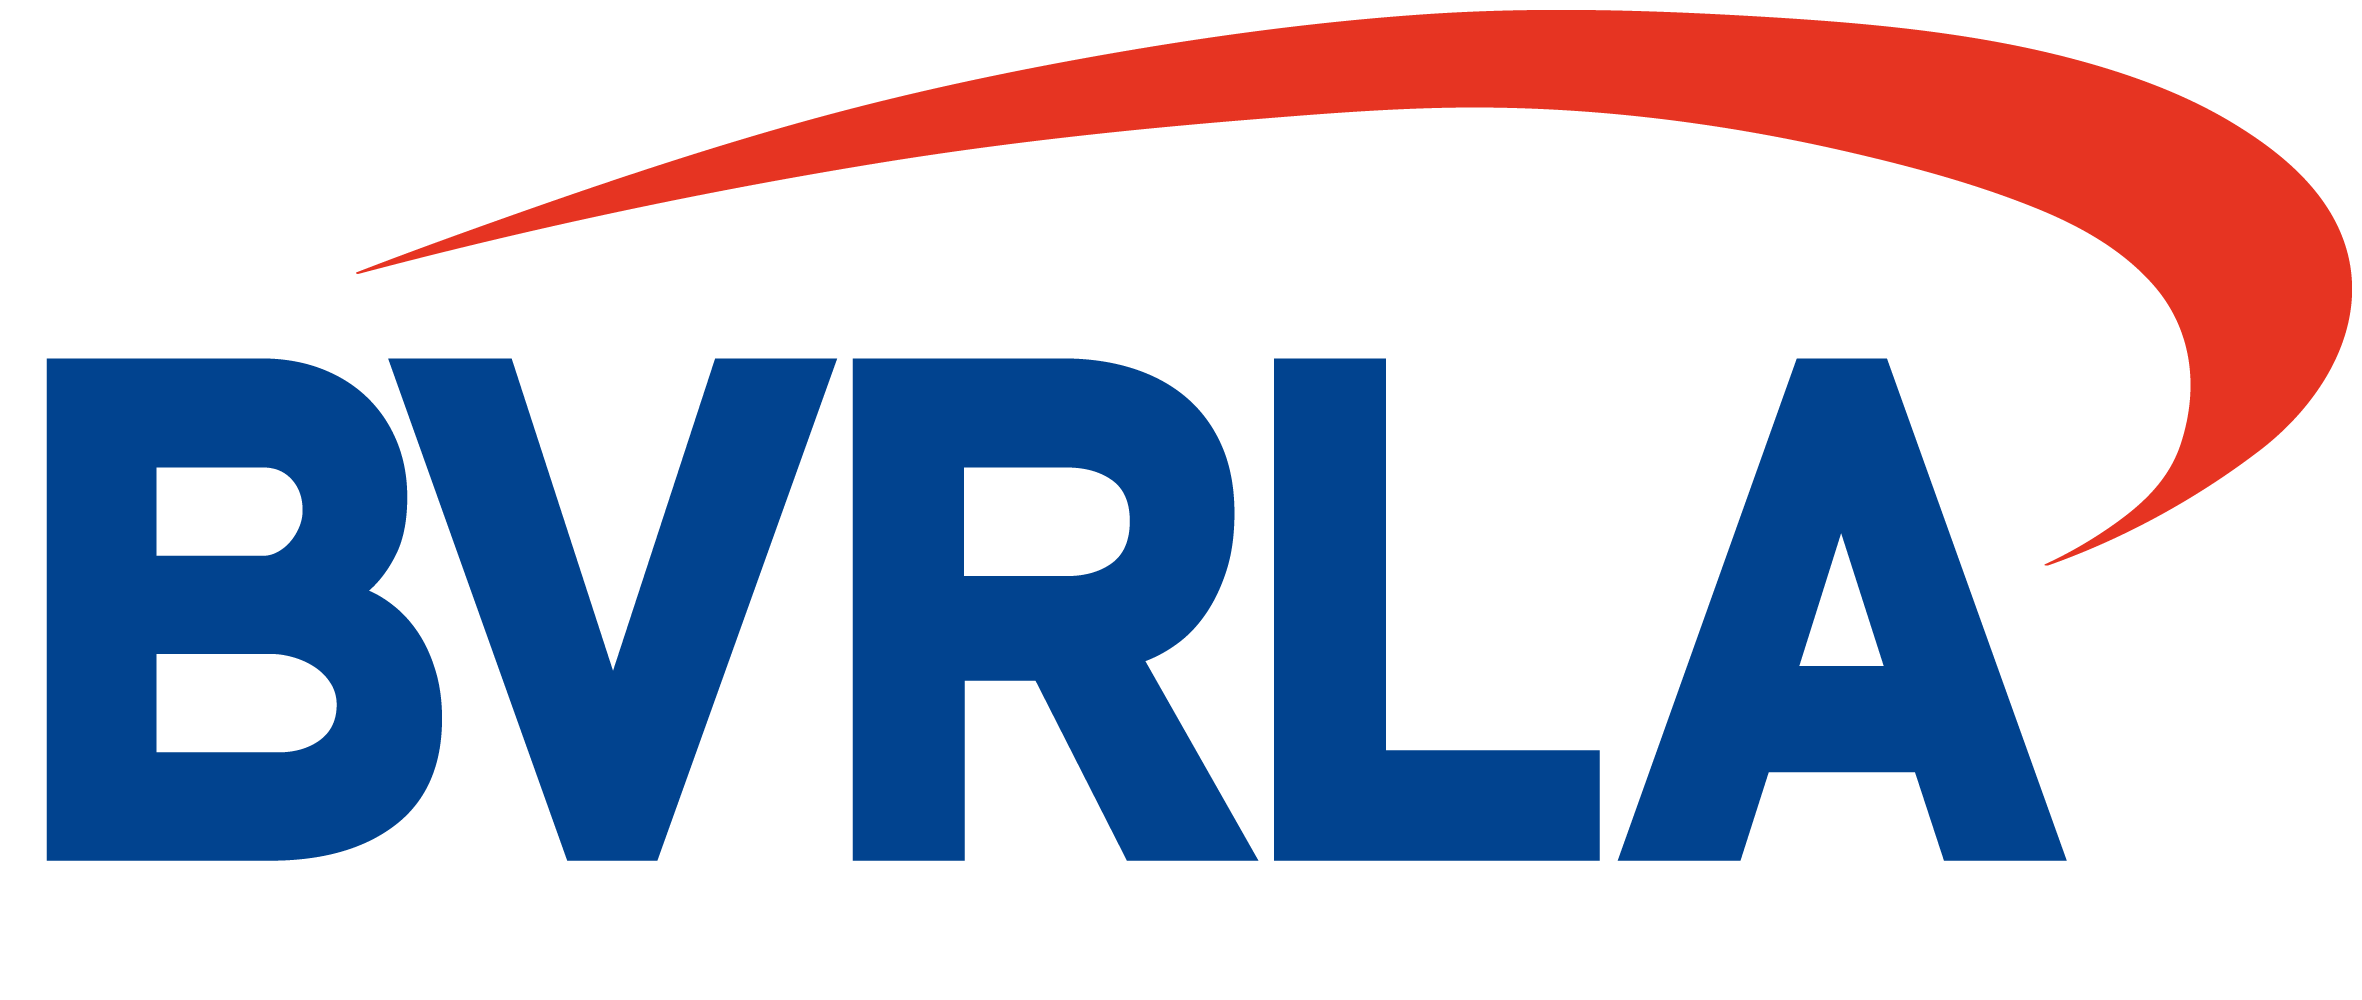 BVRLA Logo 2017